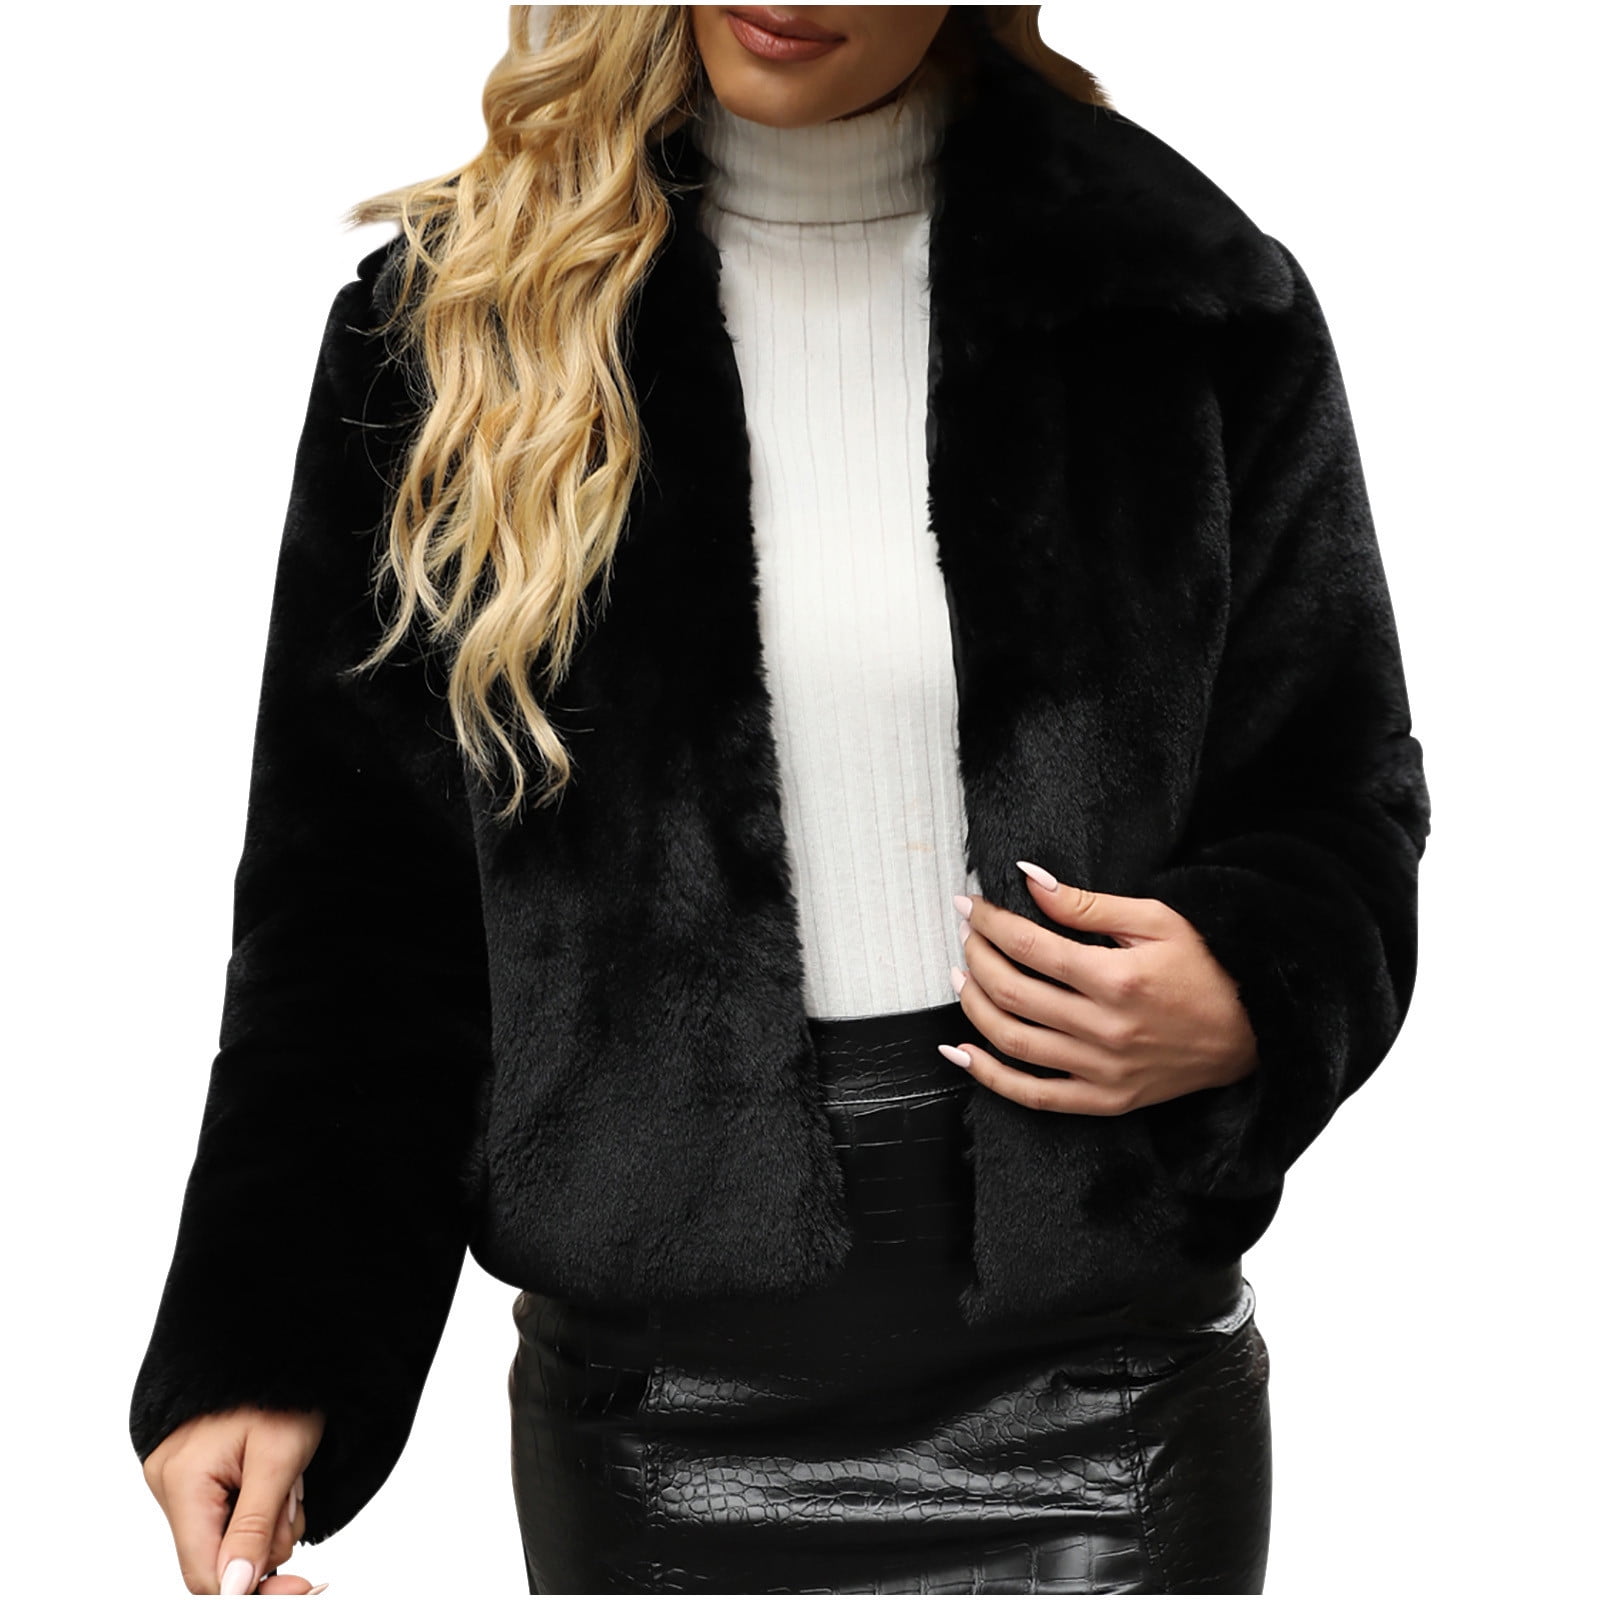 Girls Elegant Fleece Thermal Coat, Lapel Button Down Jacket For Winter